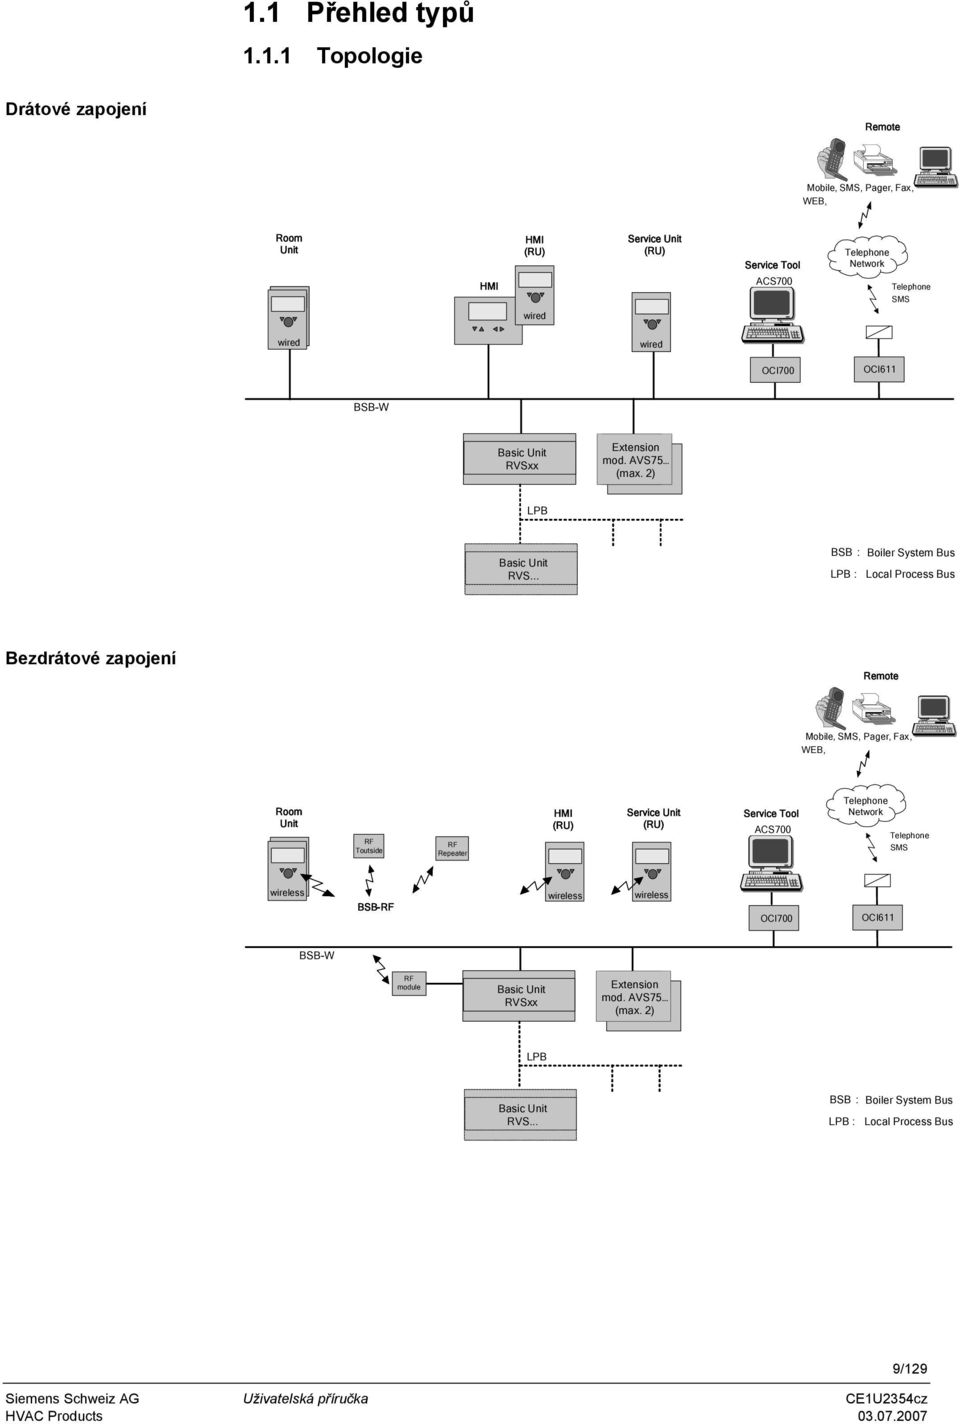 .. BSB : Boiler System Bus LPB : Local Process Bus Bezdrátové zapojení Remote Mobile, SMS, Pager, Fax, WEB, Room Unit RF Toutside RF Repeater HMI (RU) Service Unit (RU) Service Tool ACS700